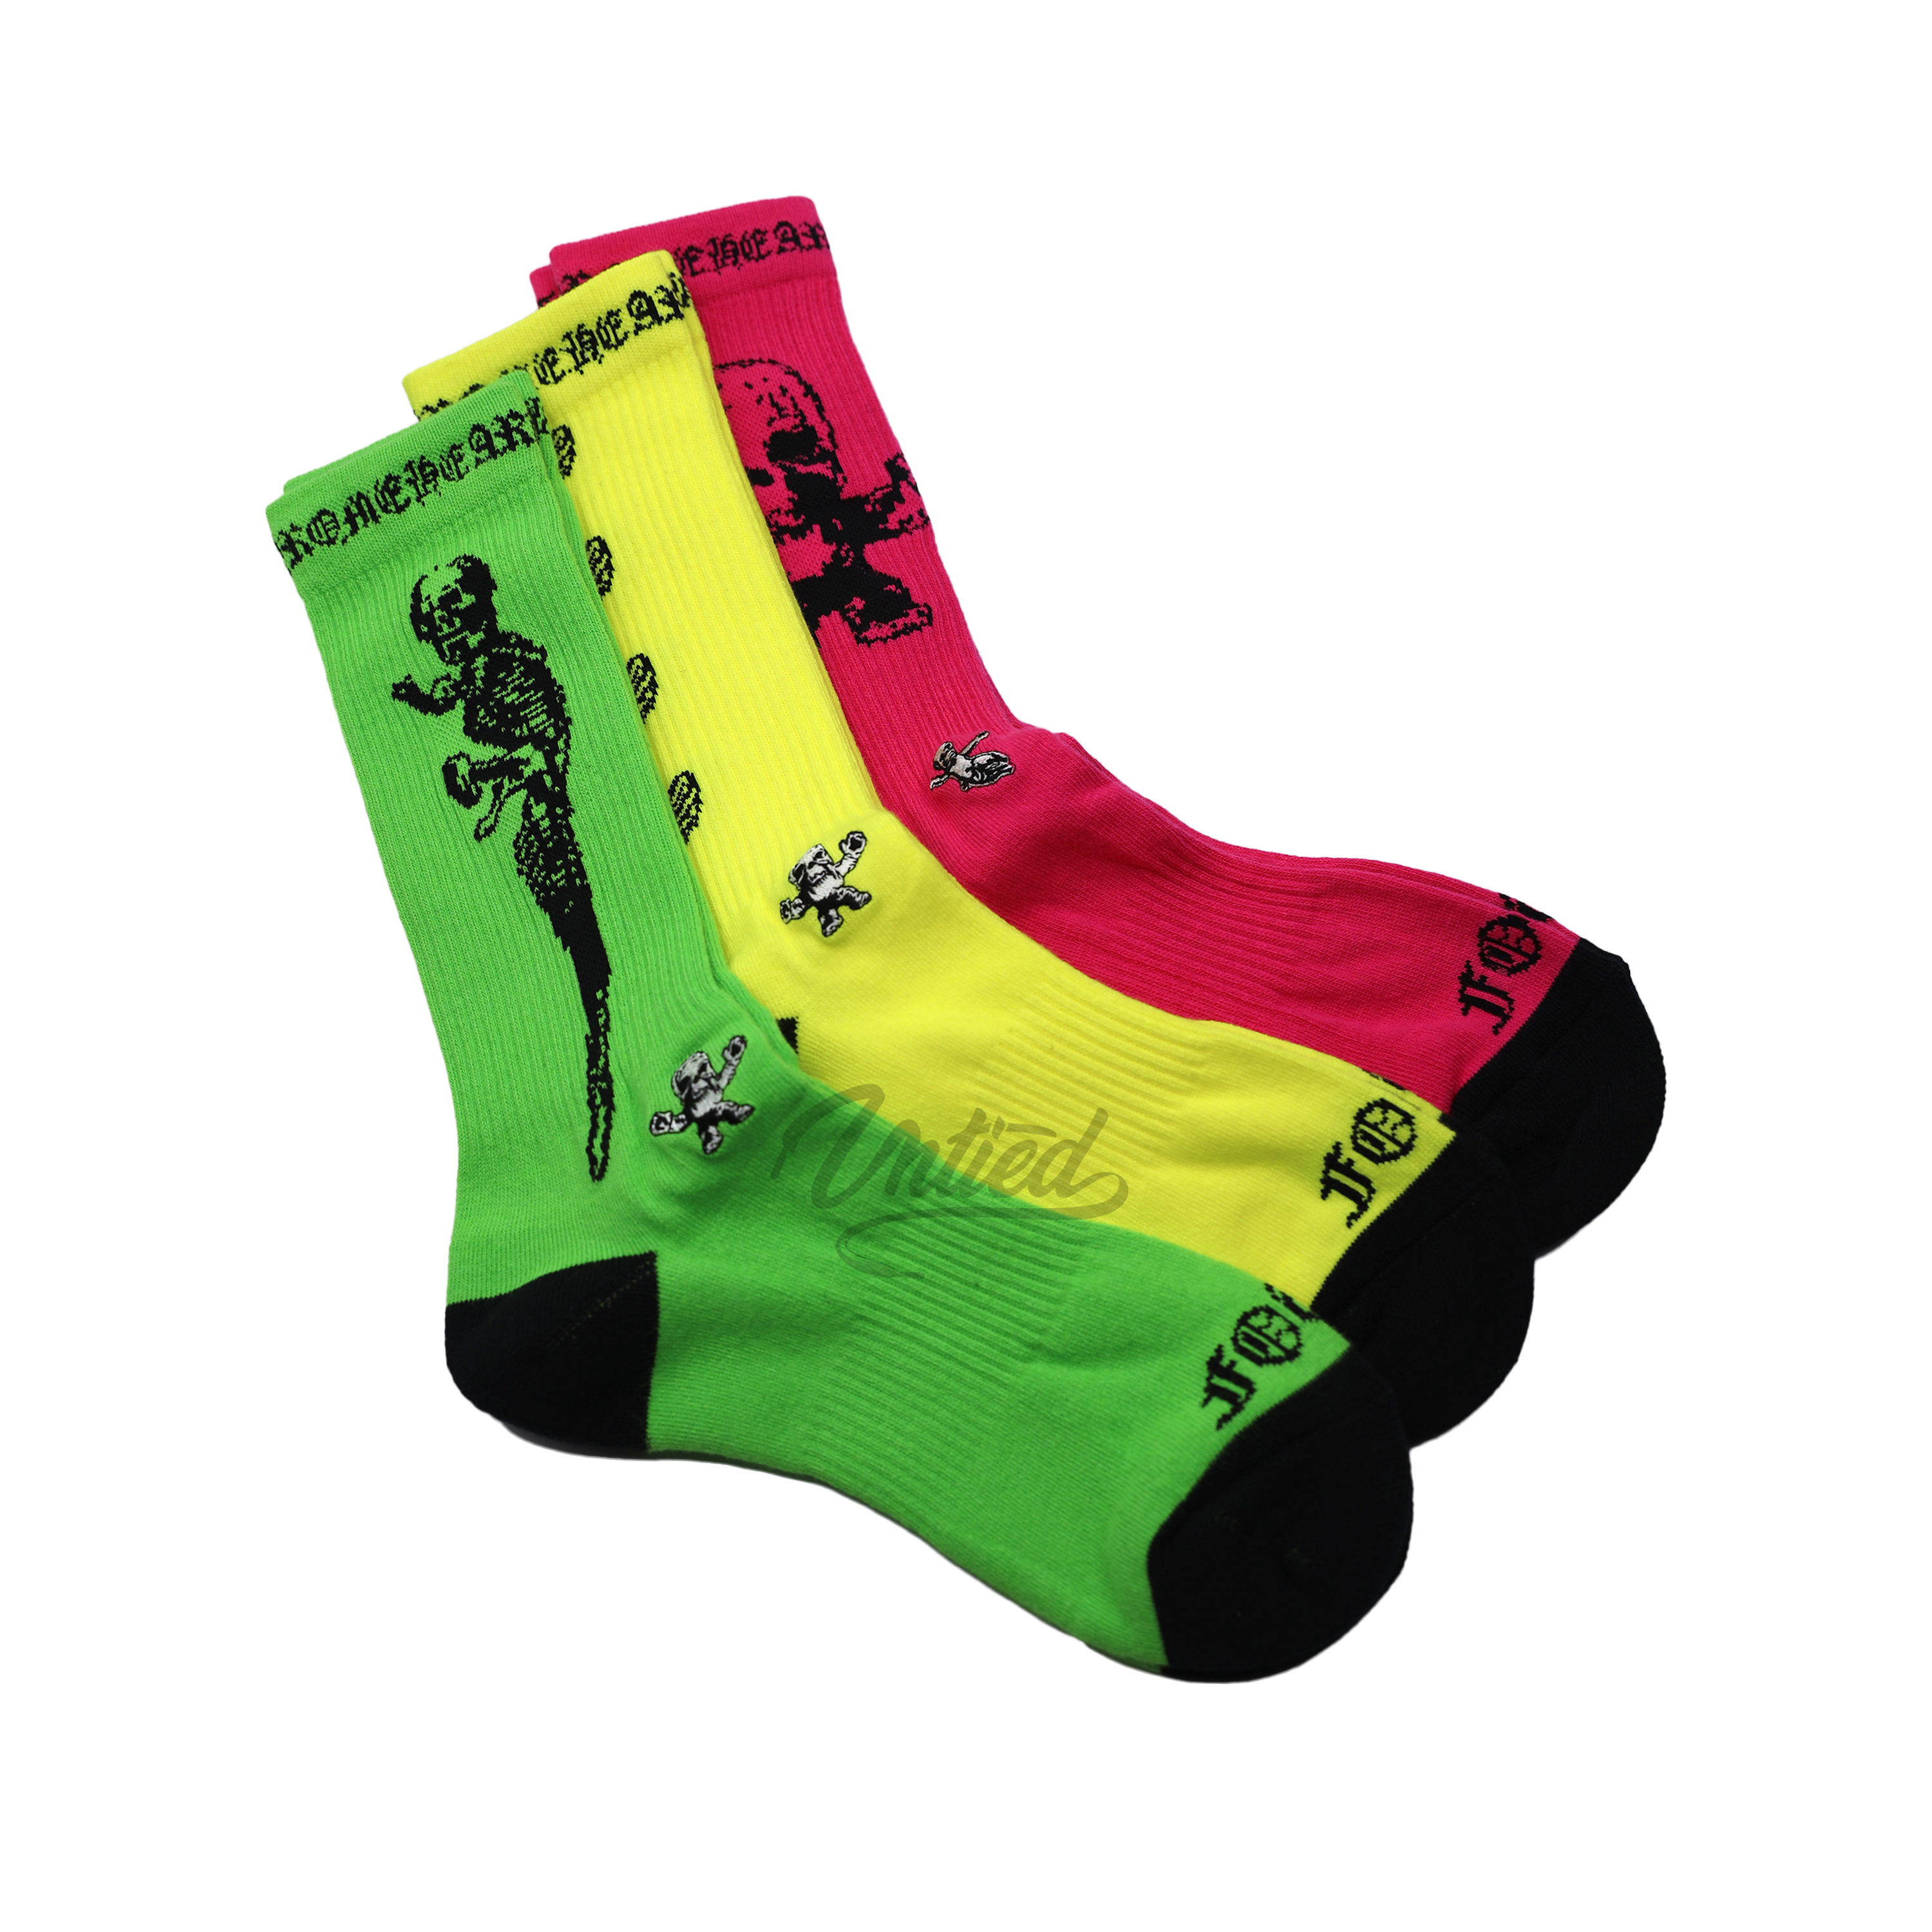 Chrome Hearts Foti Socks (3 pack) Neon Pink/Yellow/Green - US